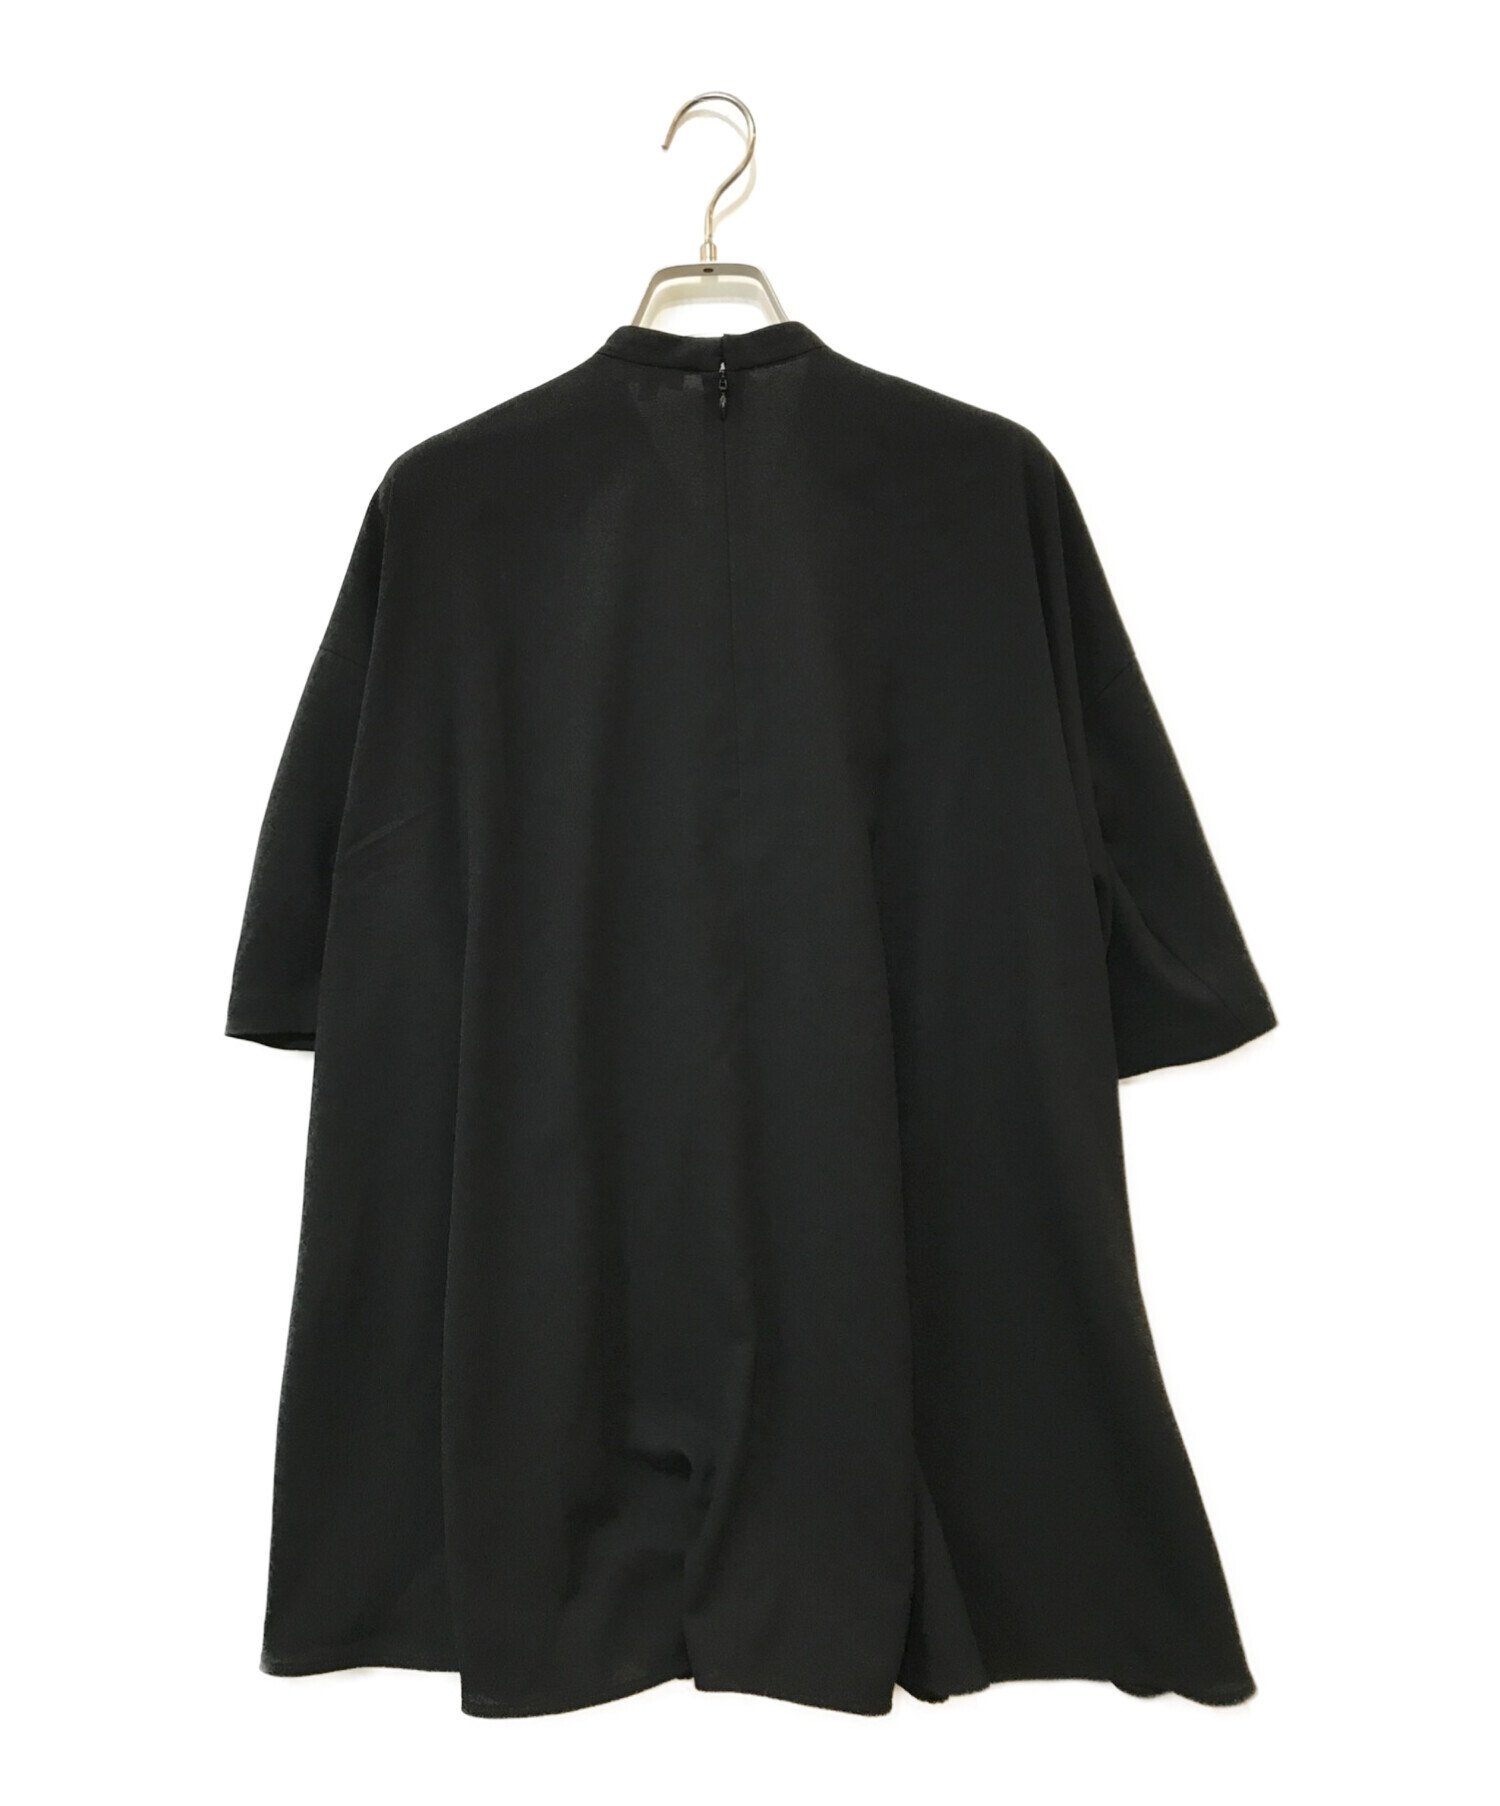 42120JPYお値下げ【美品】エンフォルド DRESS ブラック 38サイズ